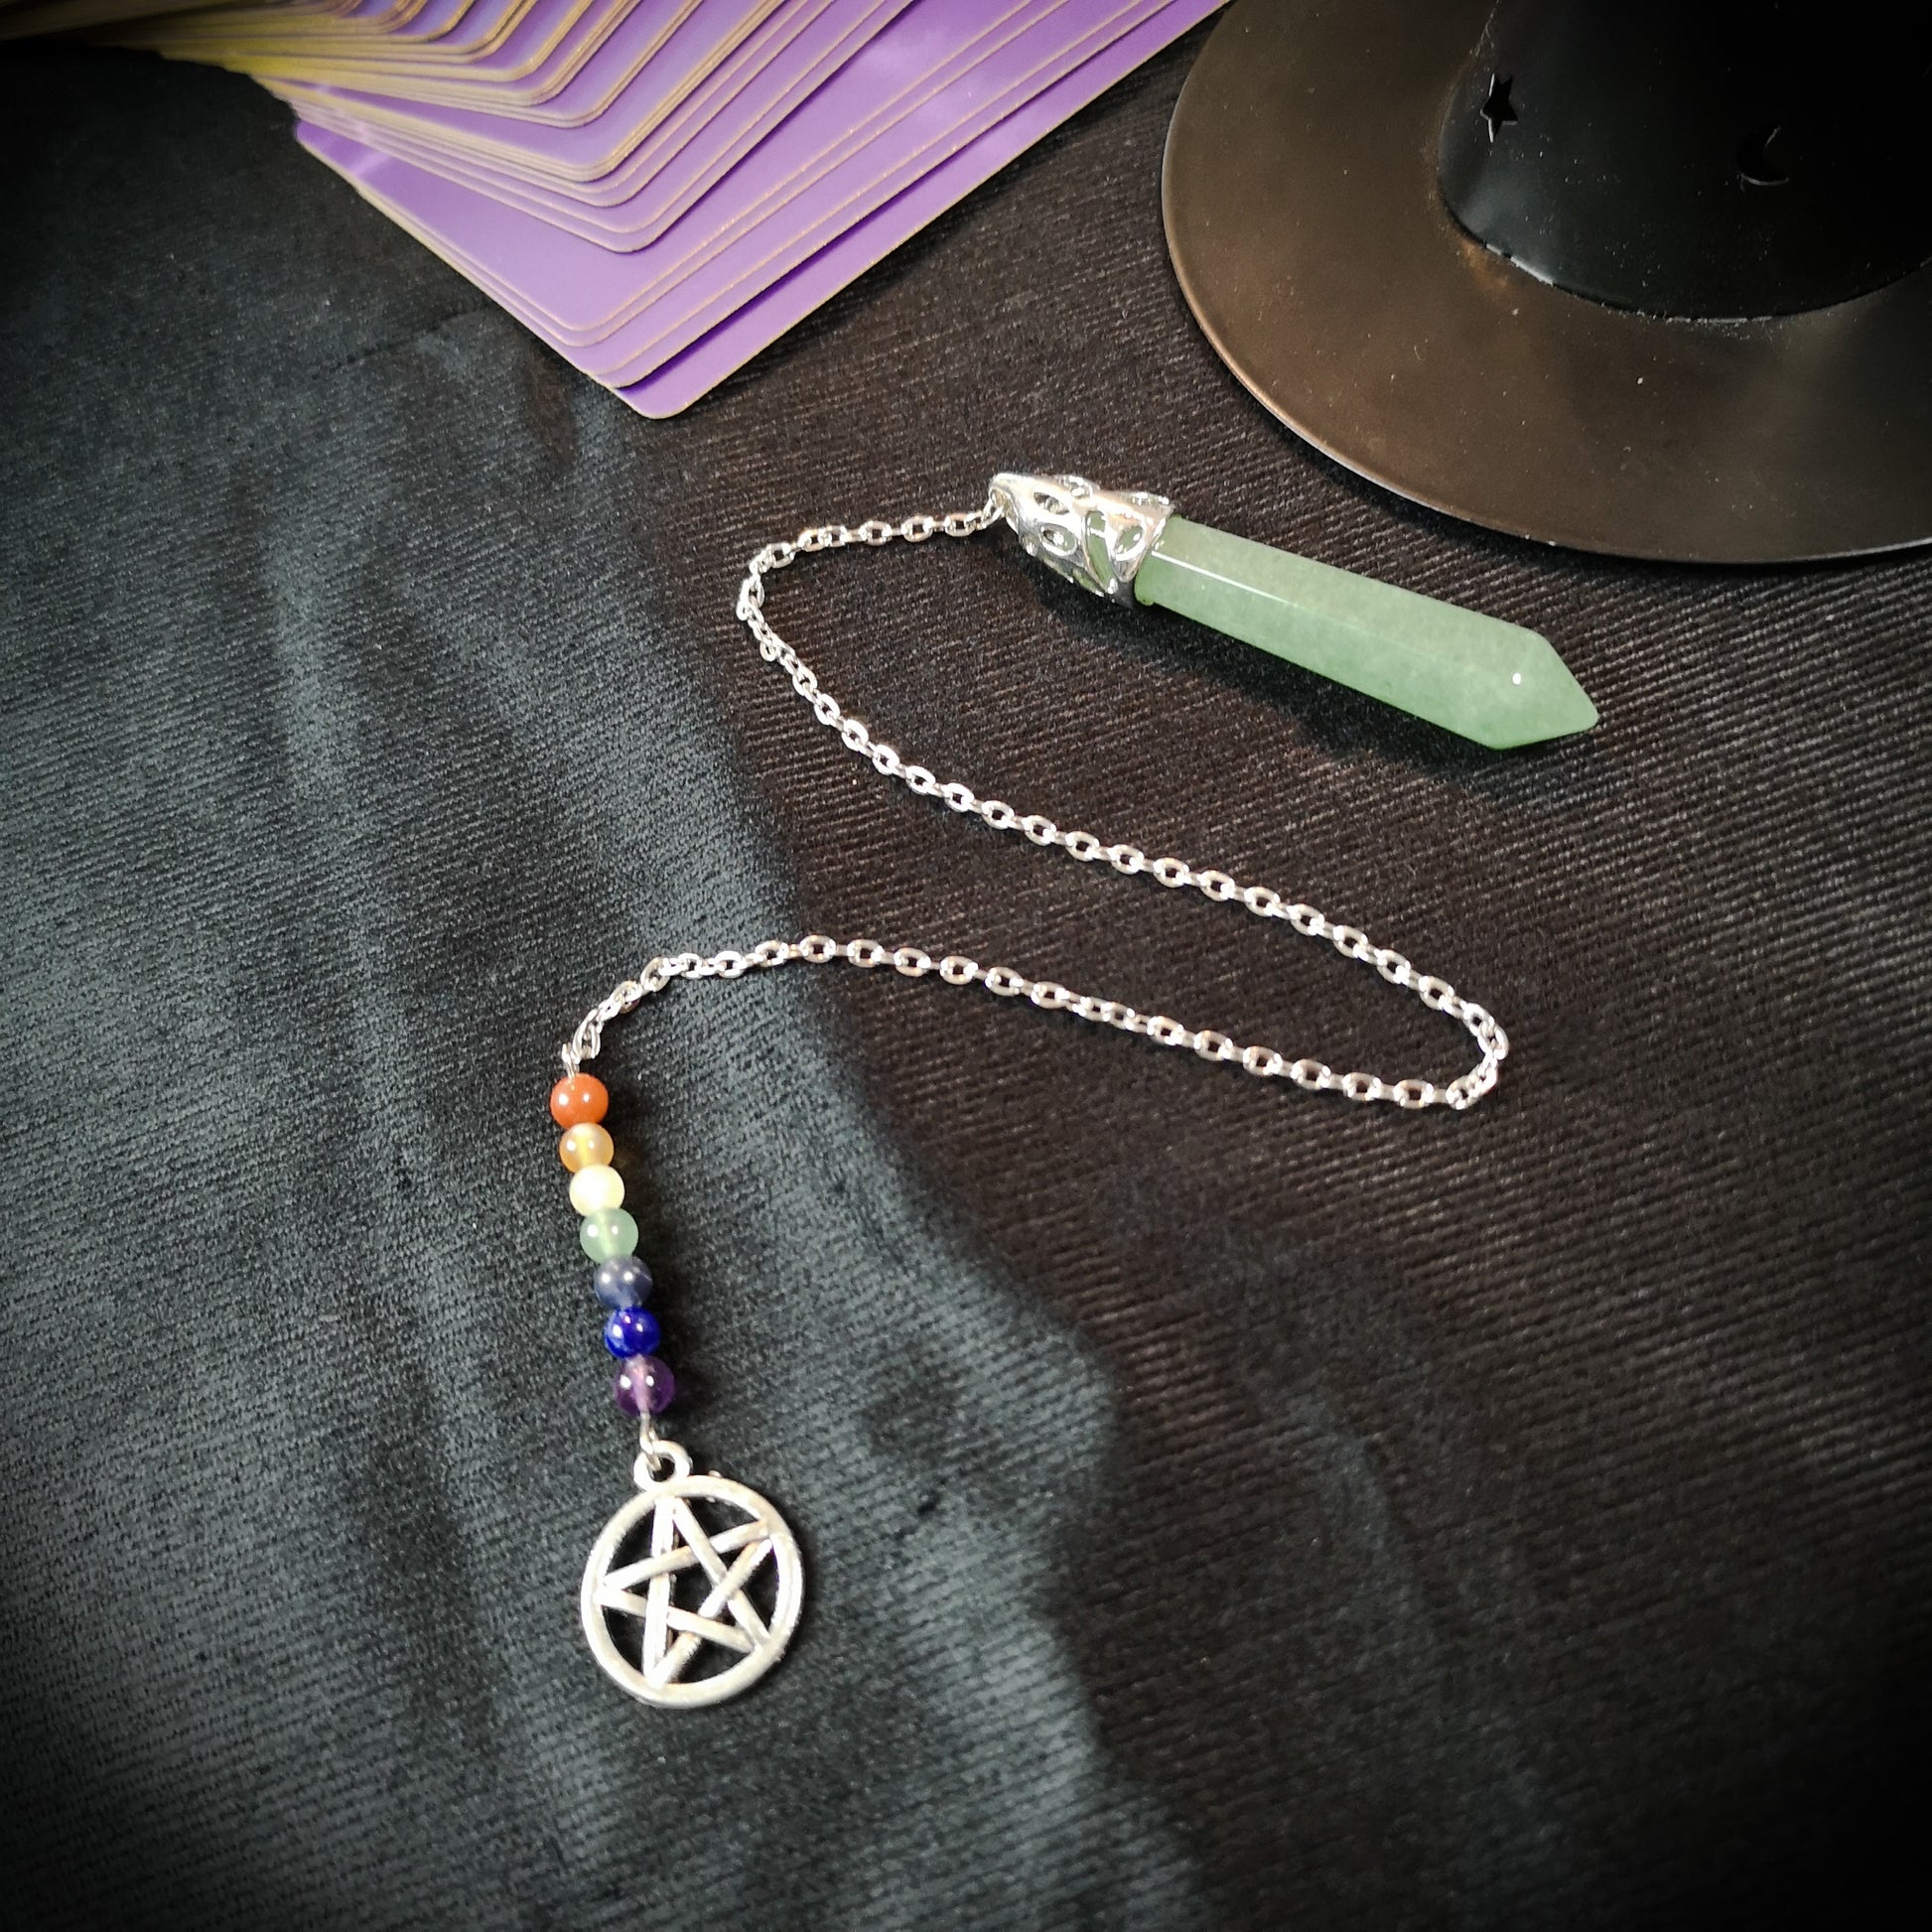 7 chakras aventurine pendulum with a pentacle Baguette Magick